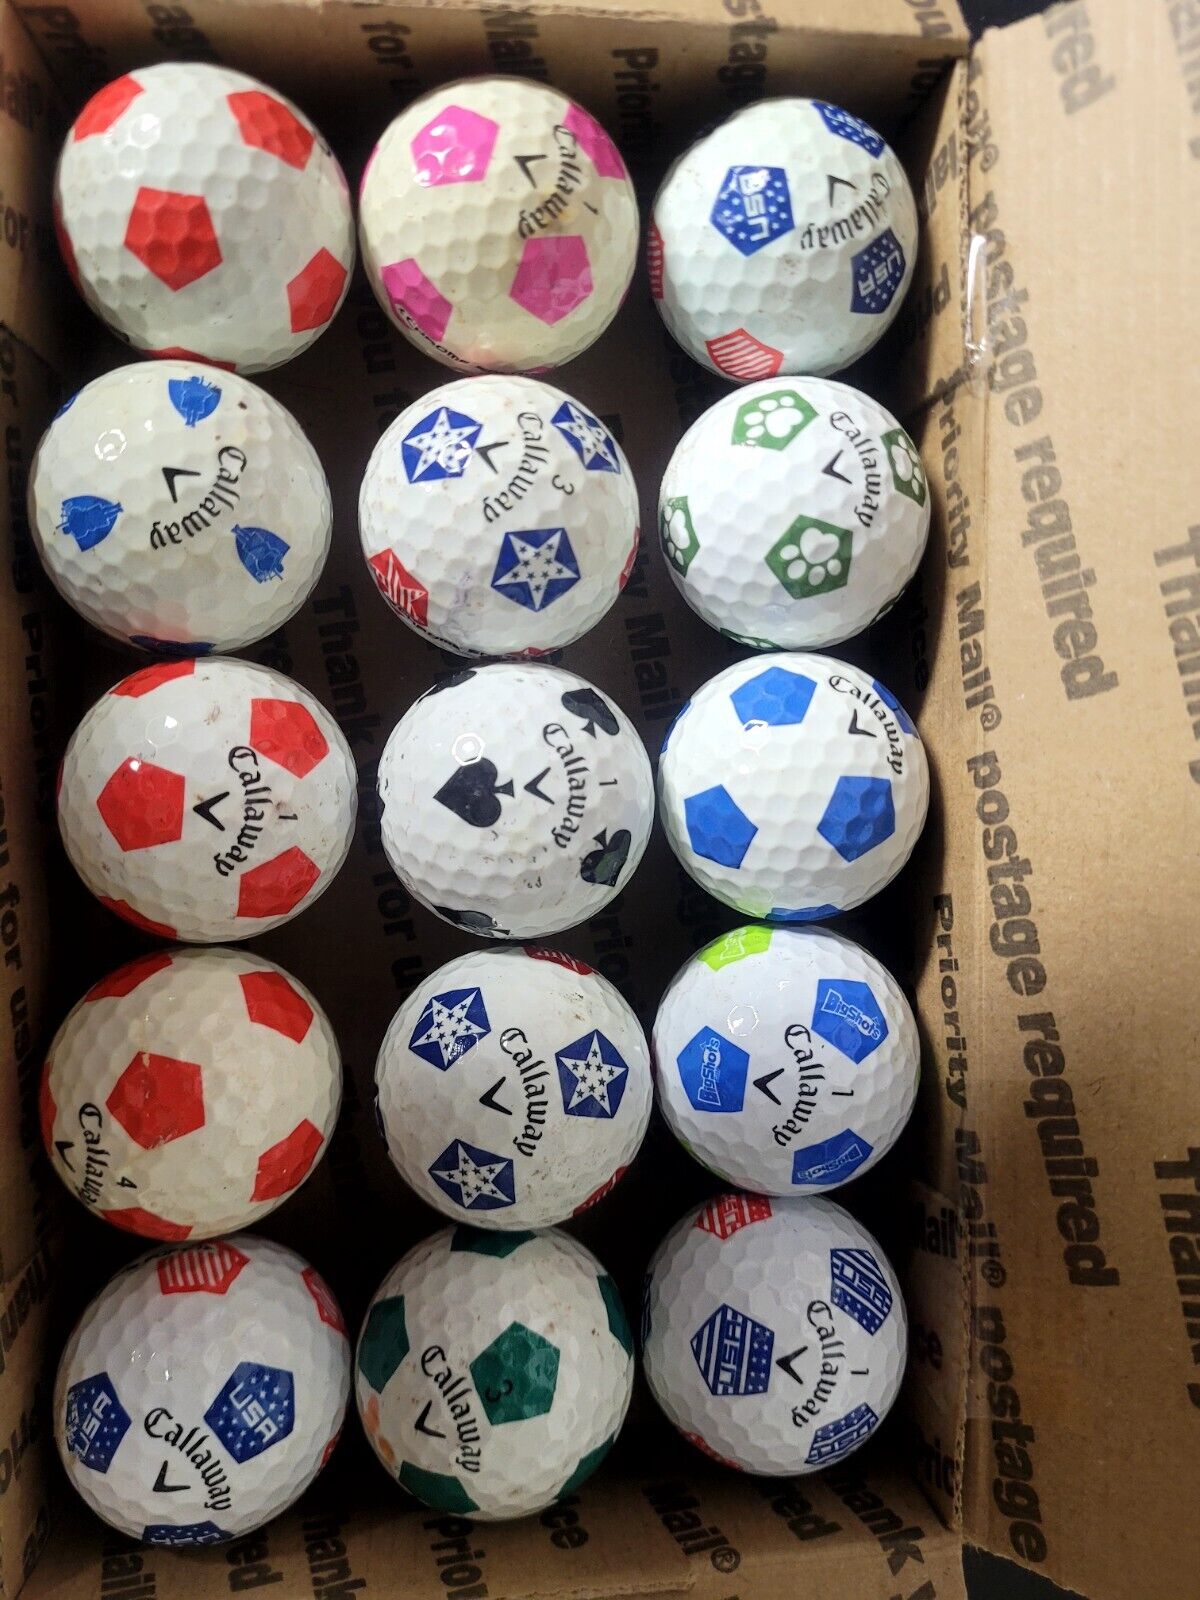 15 Ct. Callaway Chrome Soft Truvis Logo Golf Balls, 3A-5A Some Rare 